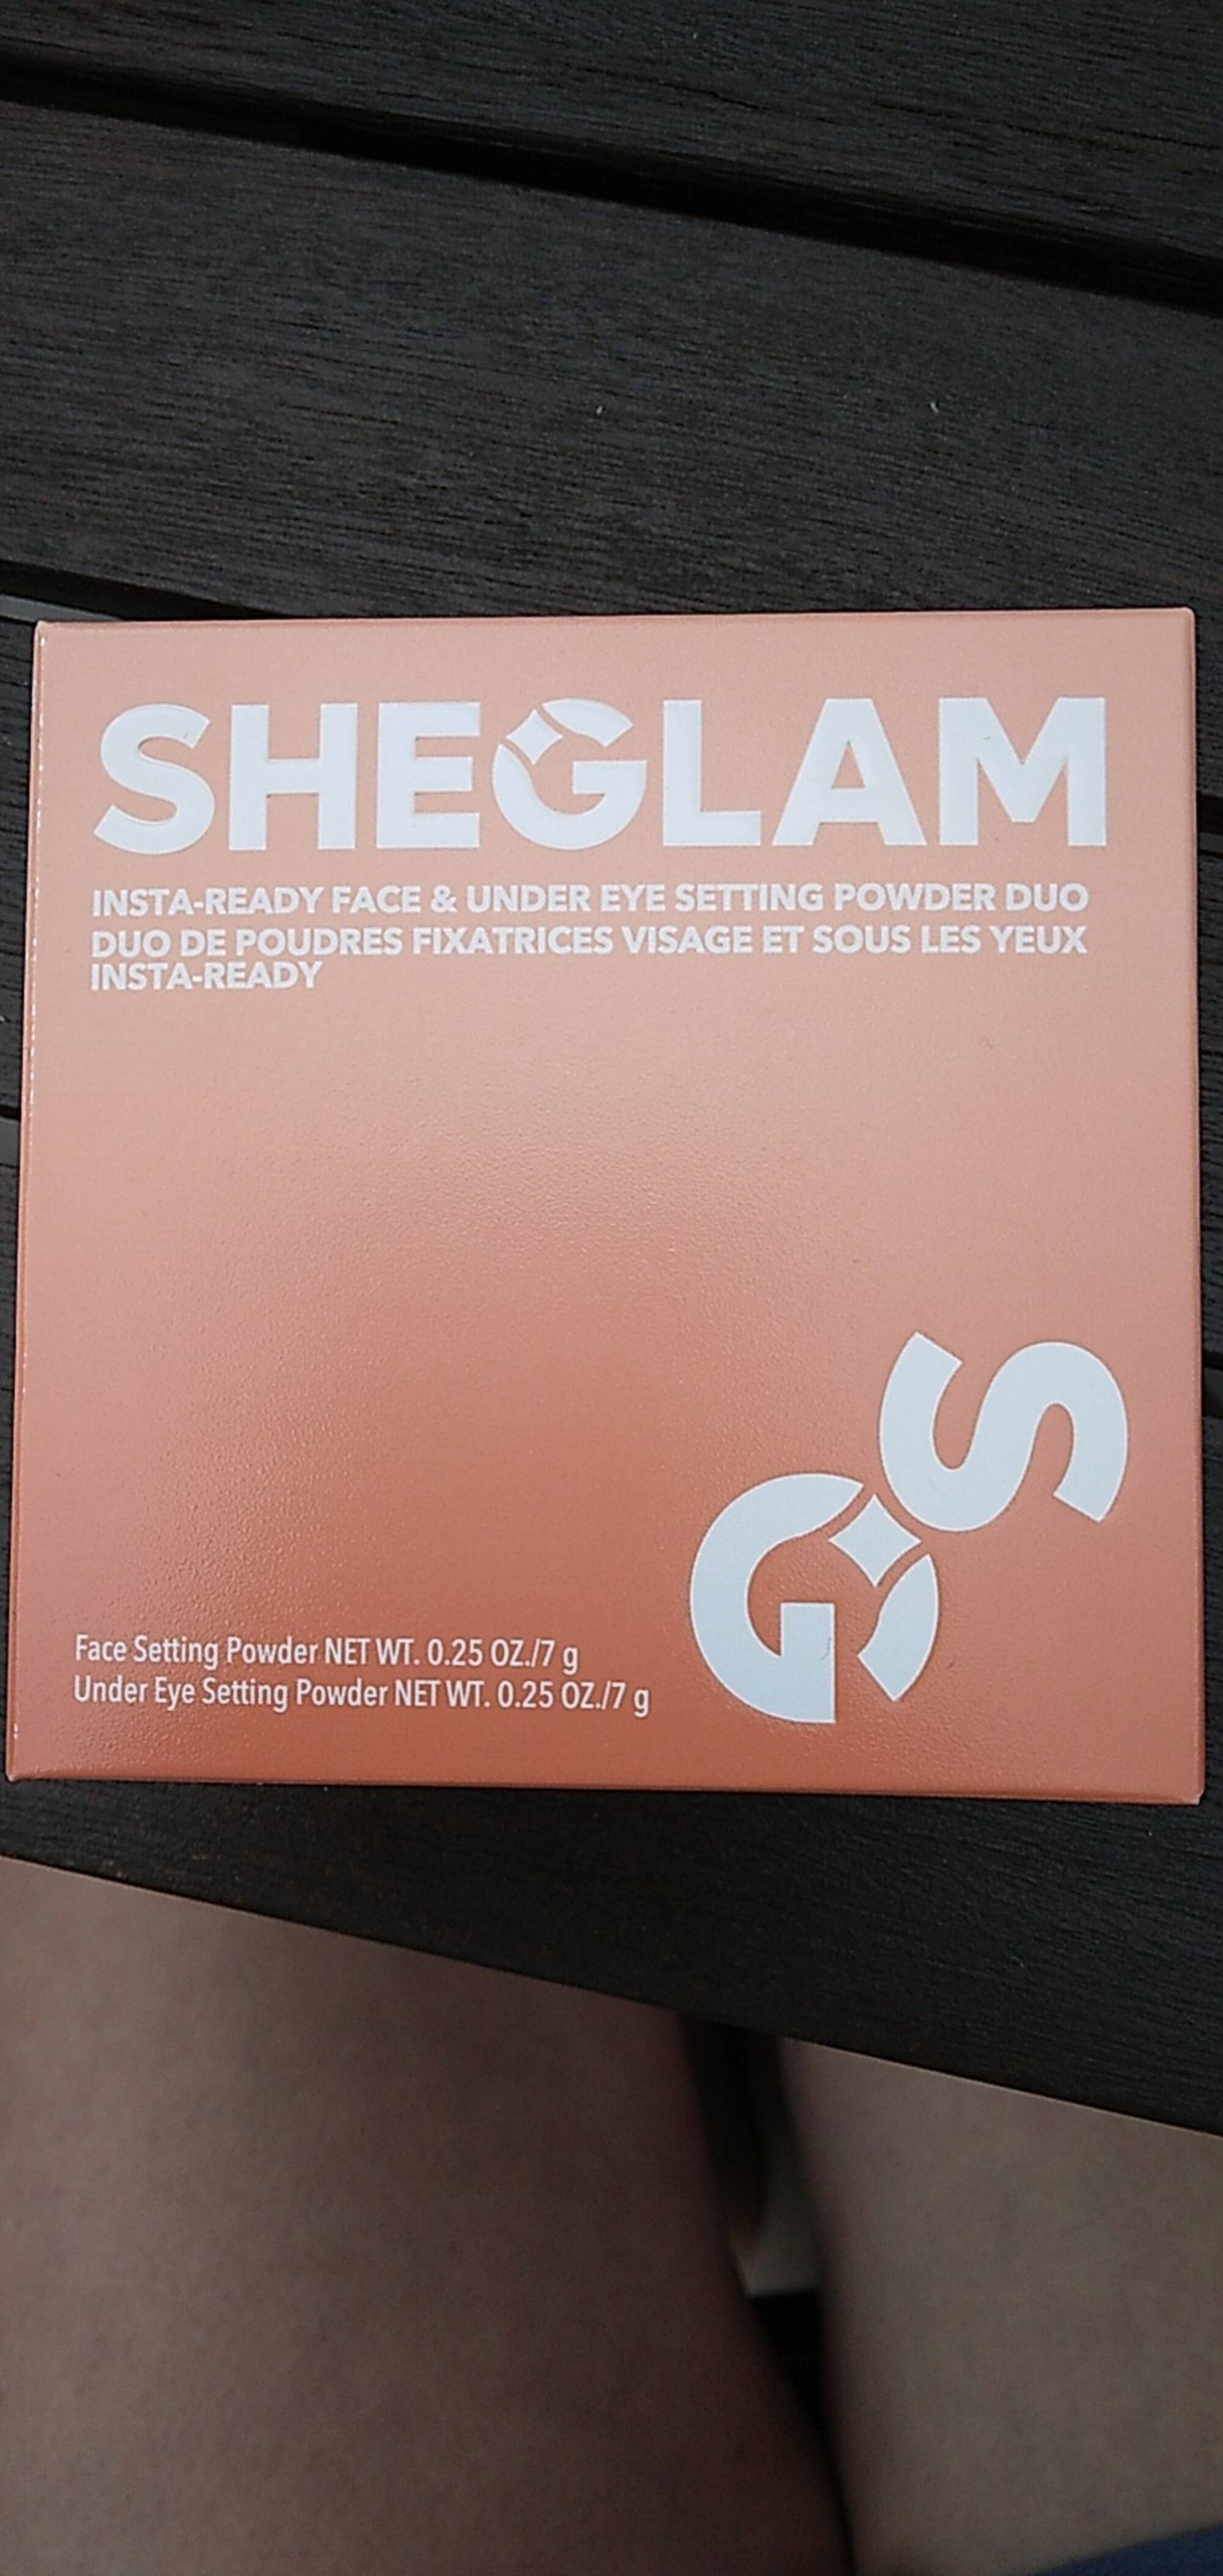 SHEGLAM - Face setting powder